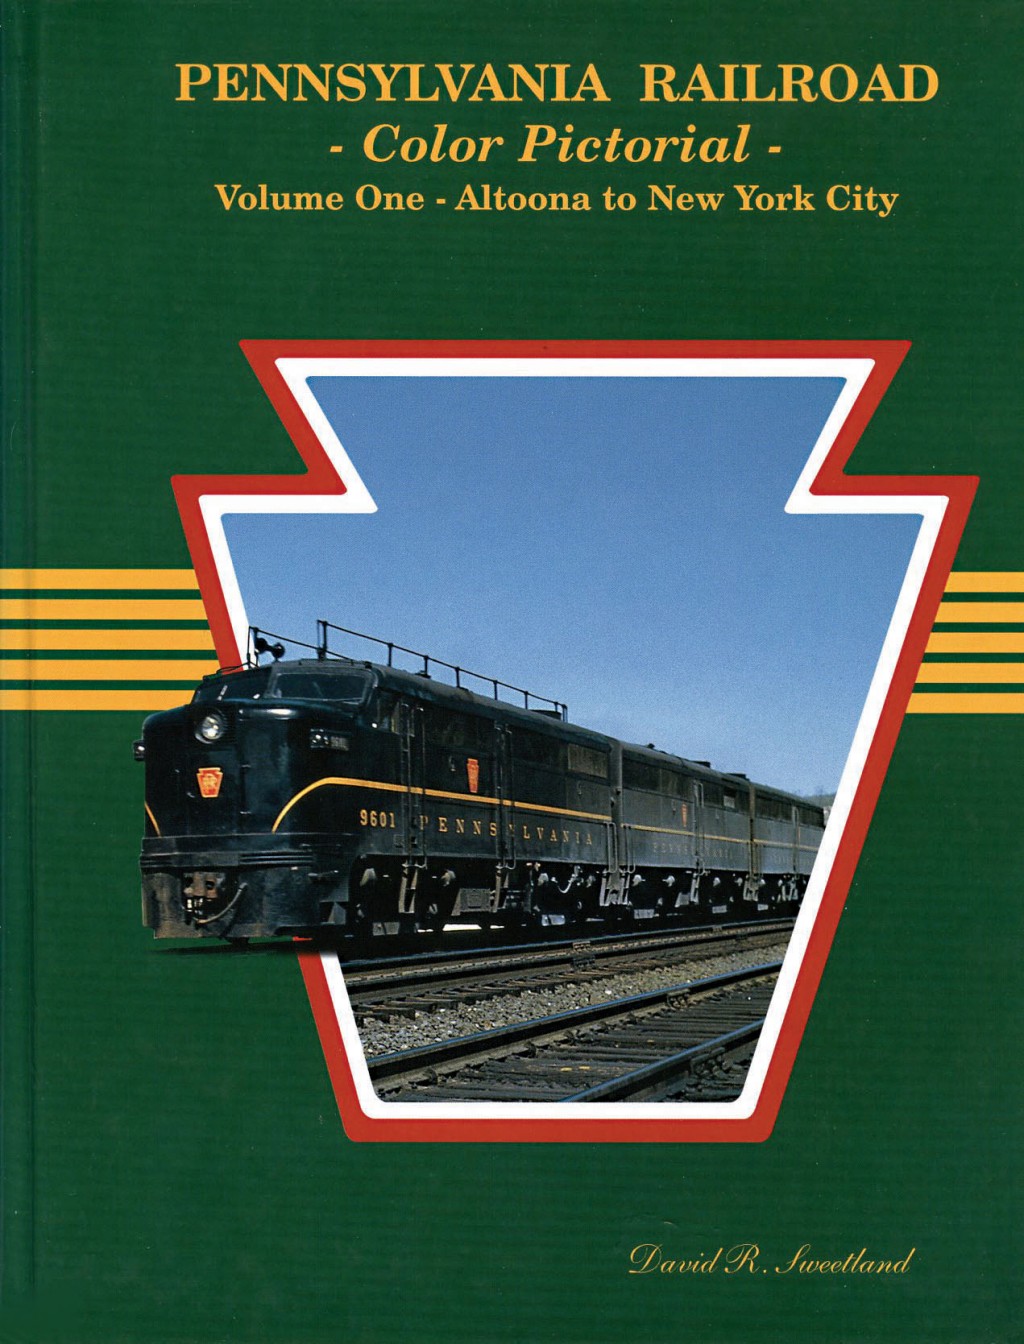 Pennsylvania Railroad Color Pictorial: Volume One - Altoona to New York City